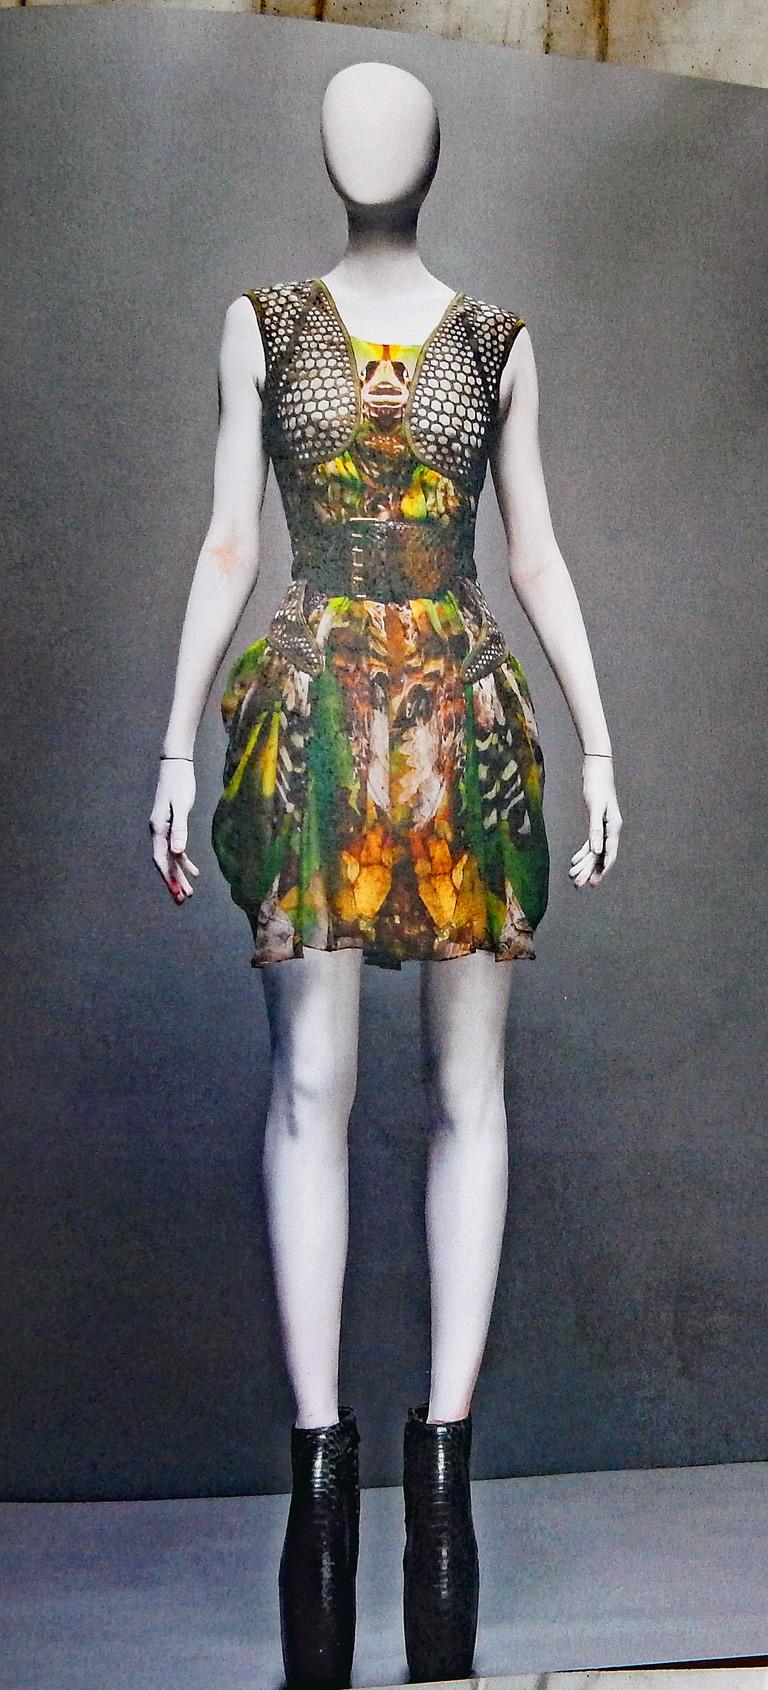  Rare! NWT Alexander McQueen 'Moth' dress, Plato's Atlantis 2010 4